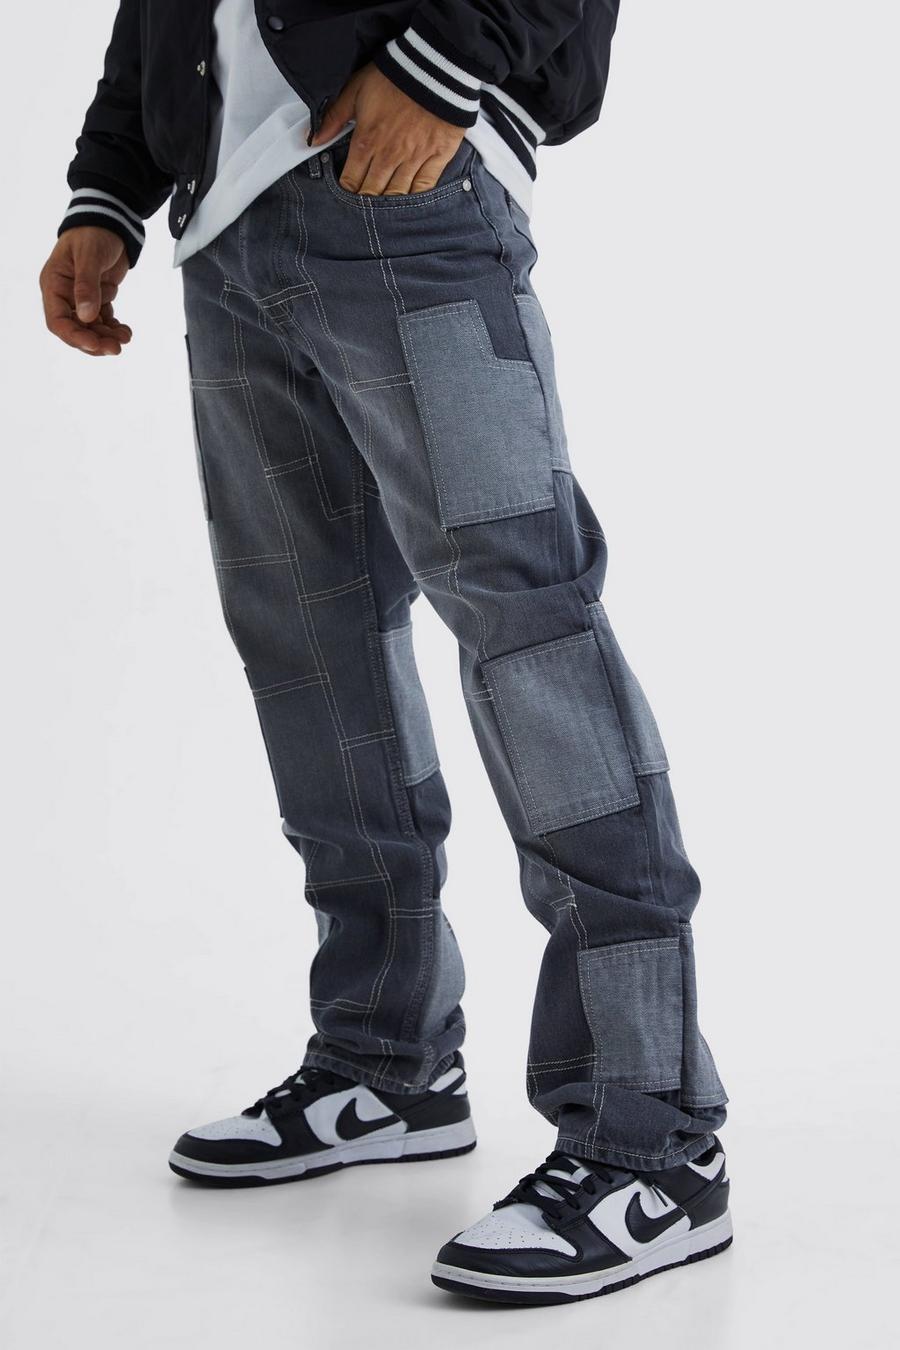 Lockere Patchwork Jeans, Light grey